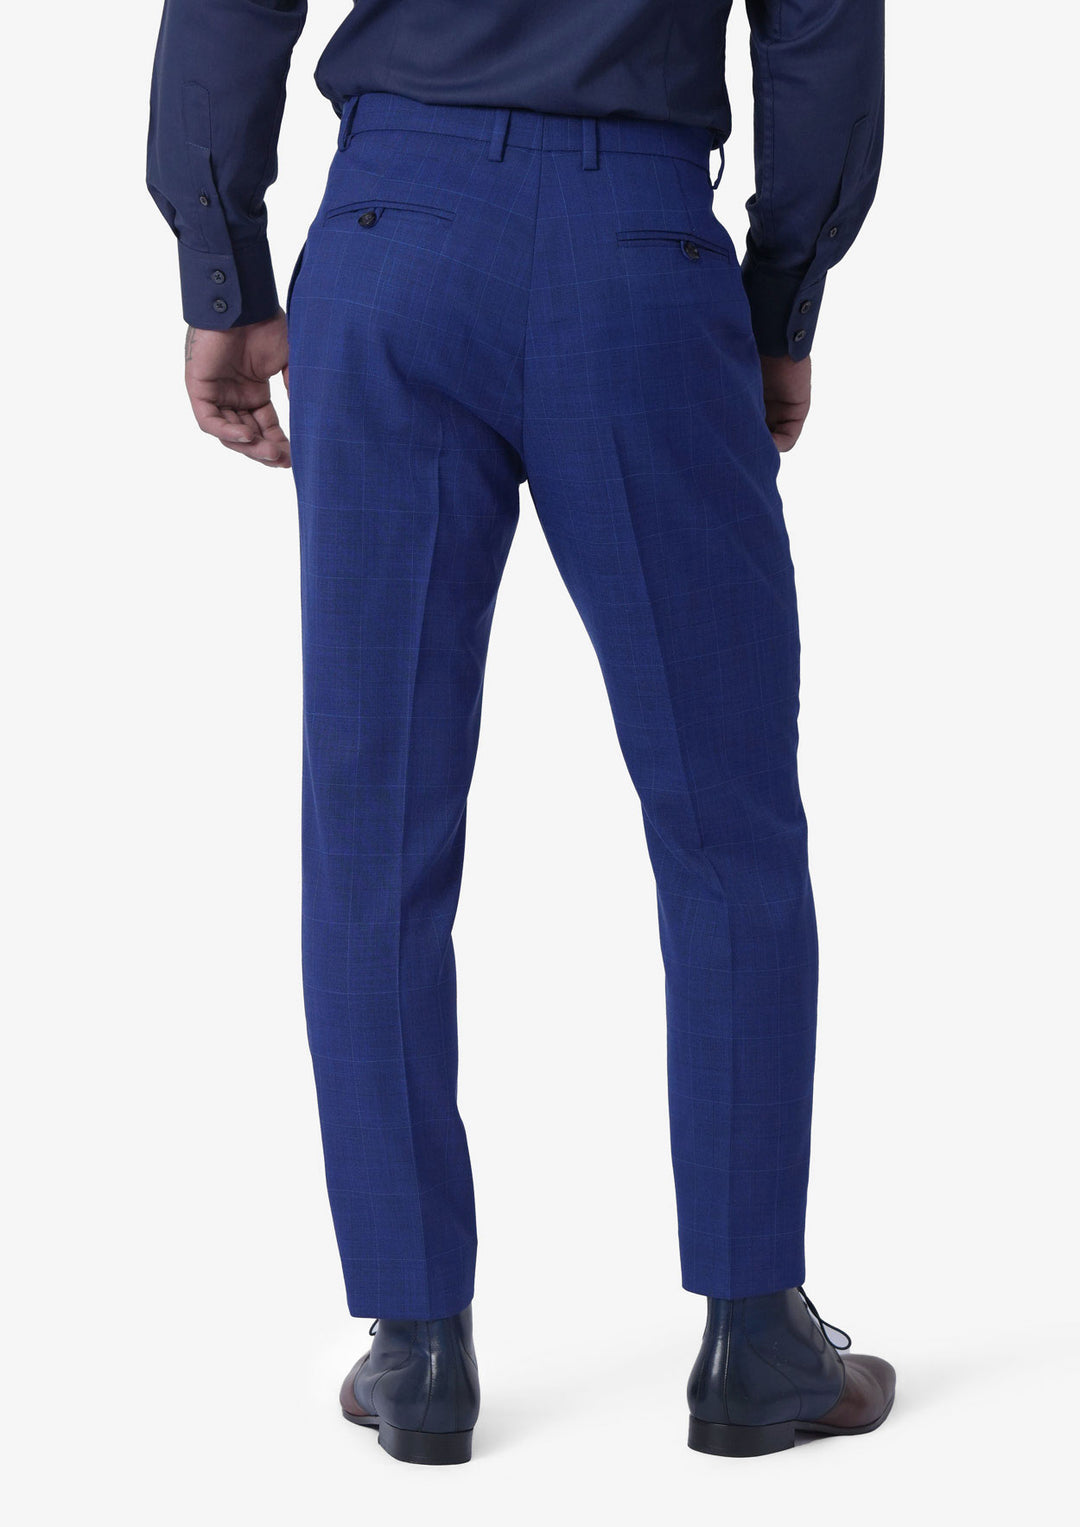 Regal Blue Windowpane Pants